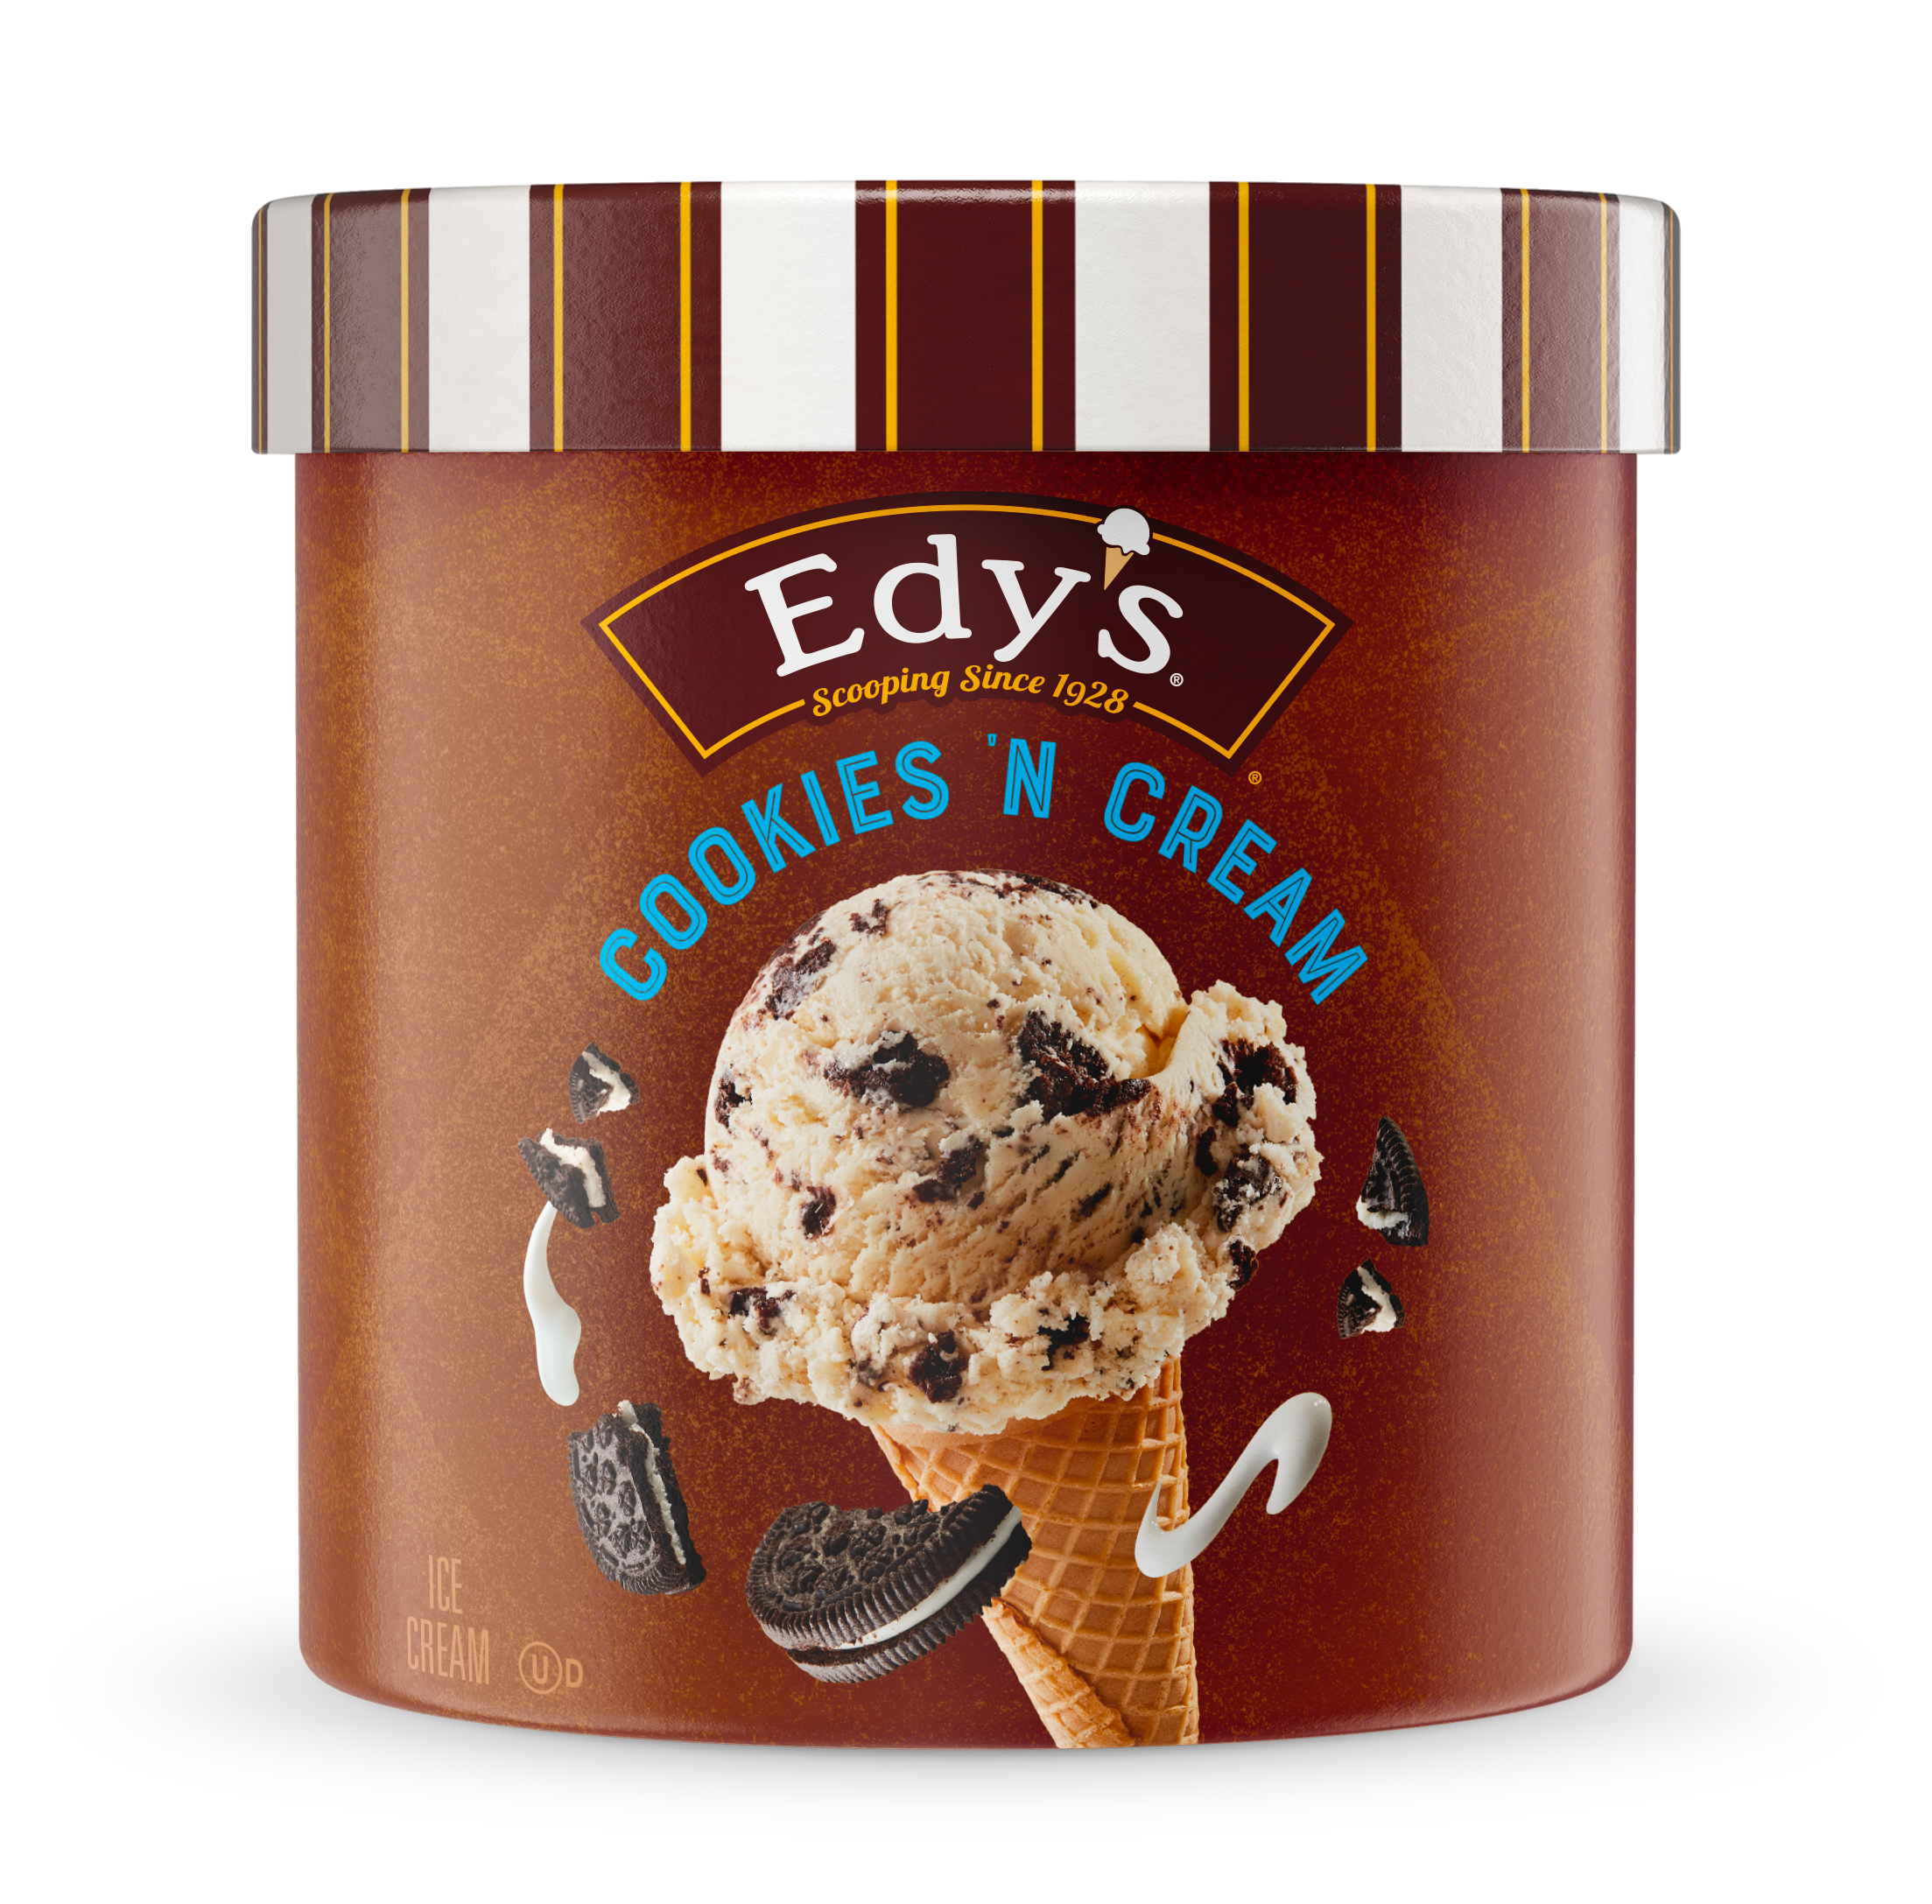 Carton of Edy's cookies 'n cream ice cream